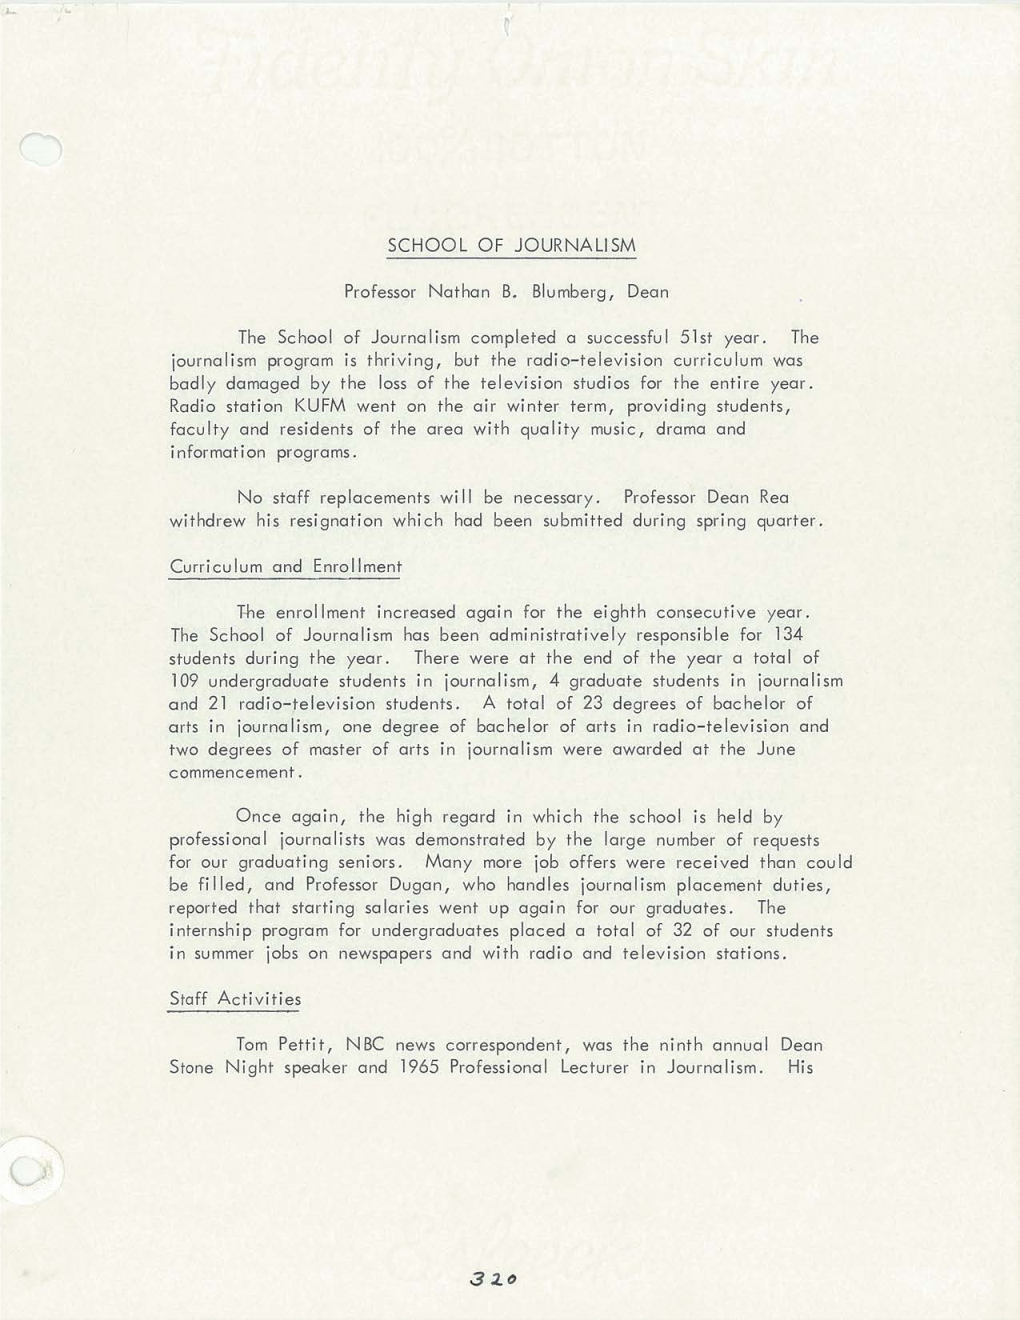 University of Montana President's Annual Report, 1964-1965